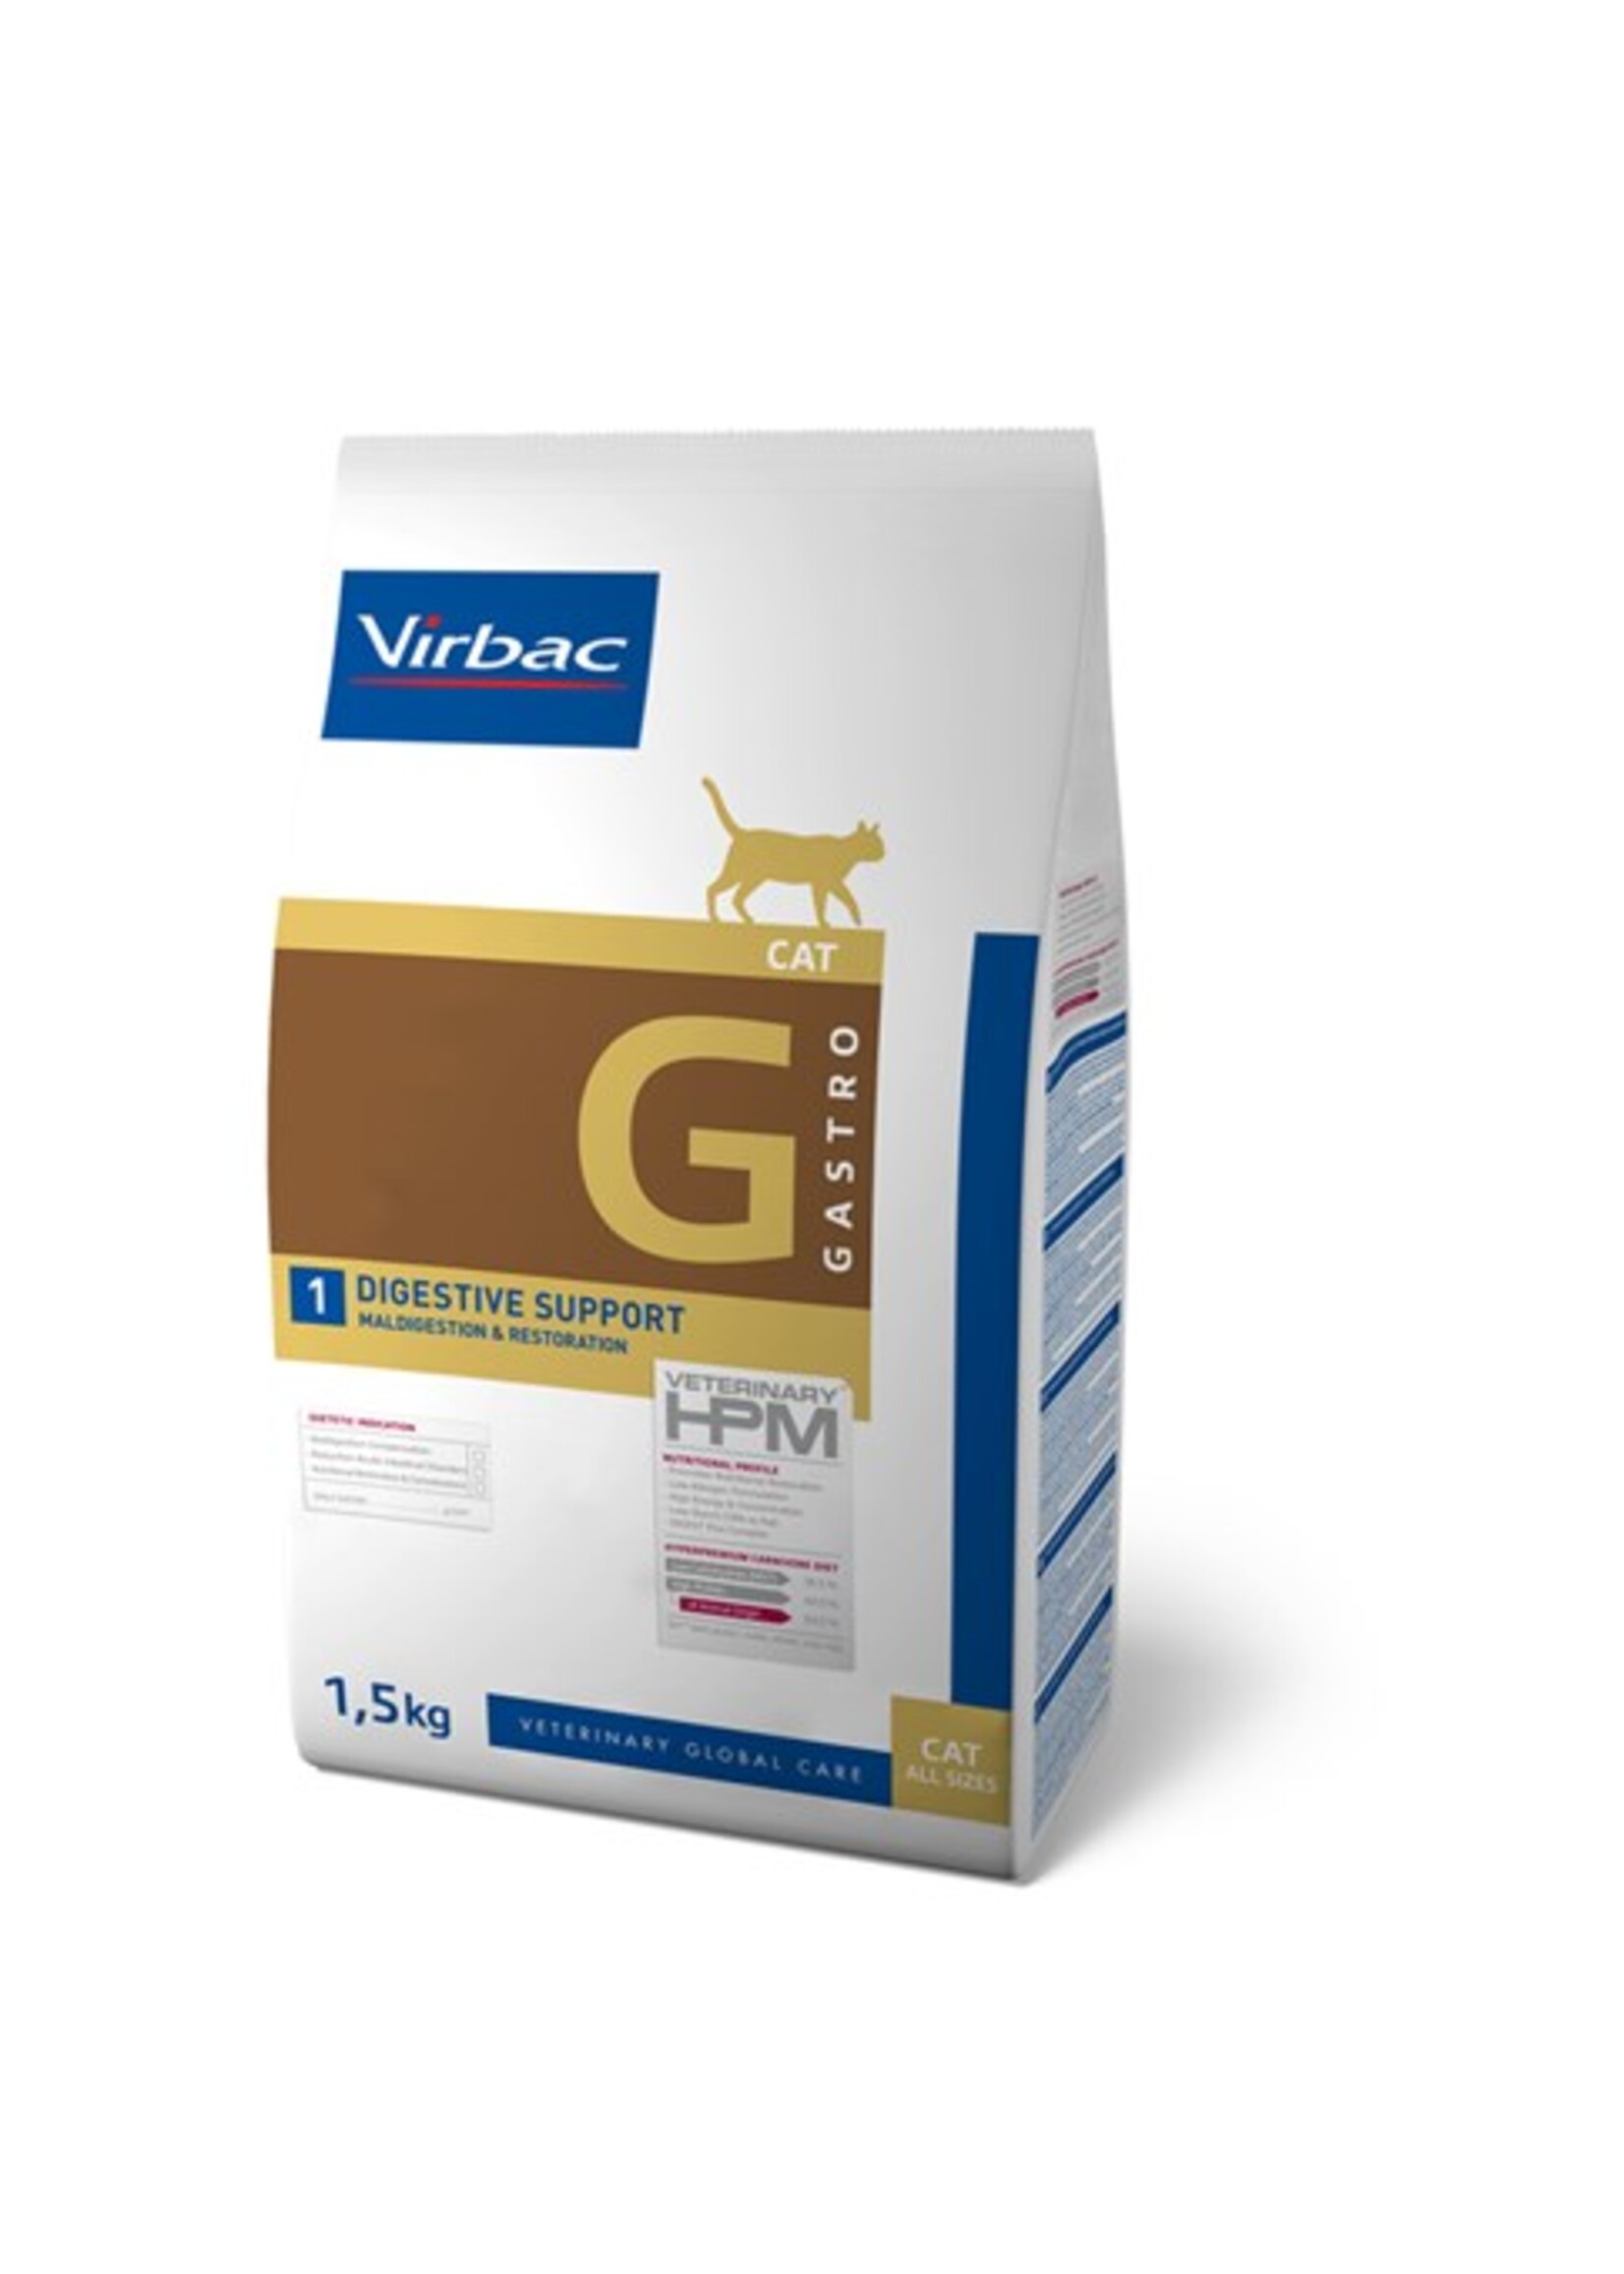 Virbac Virbac Hpm Katze Digestive Support G1 1,5kg